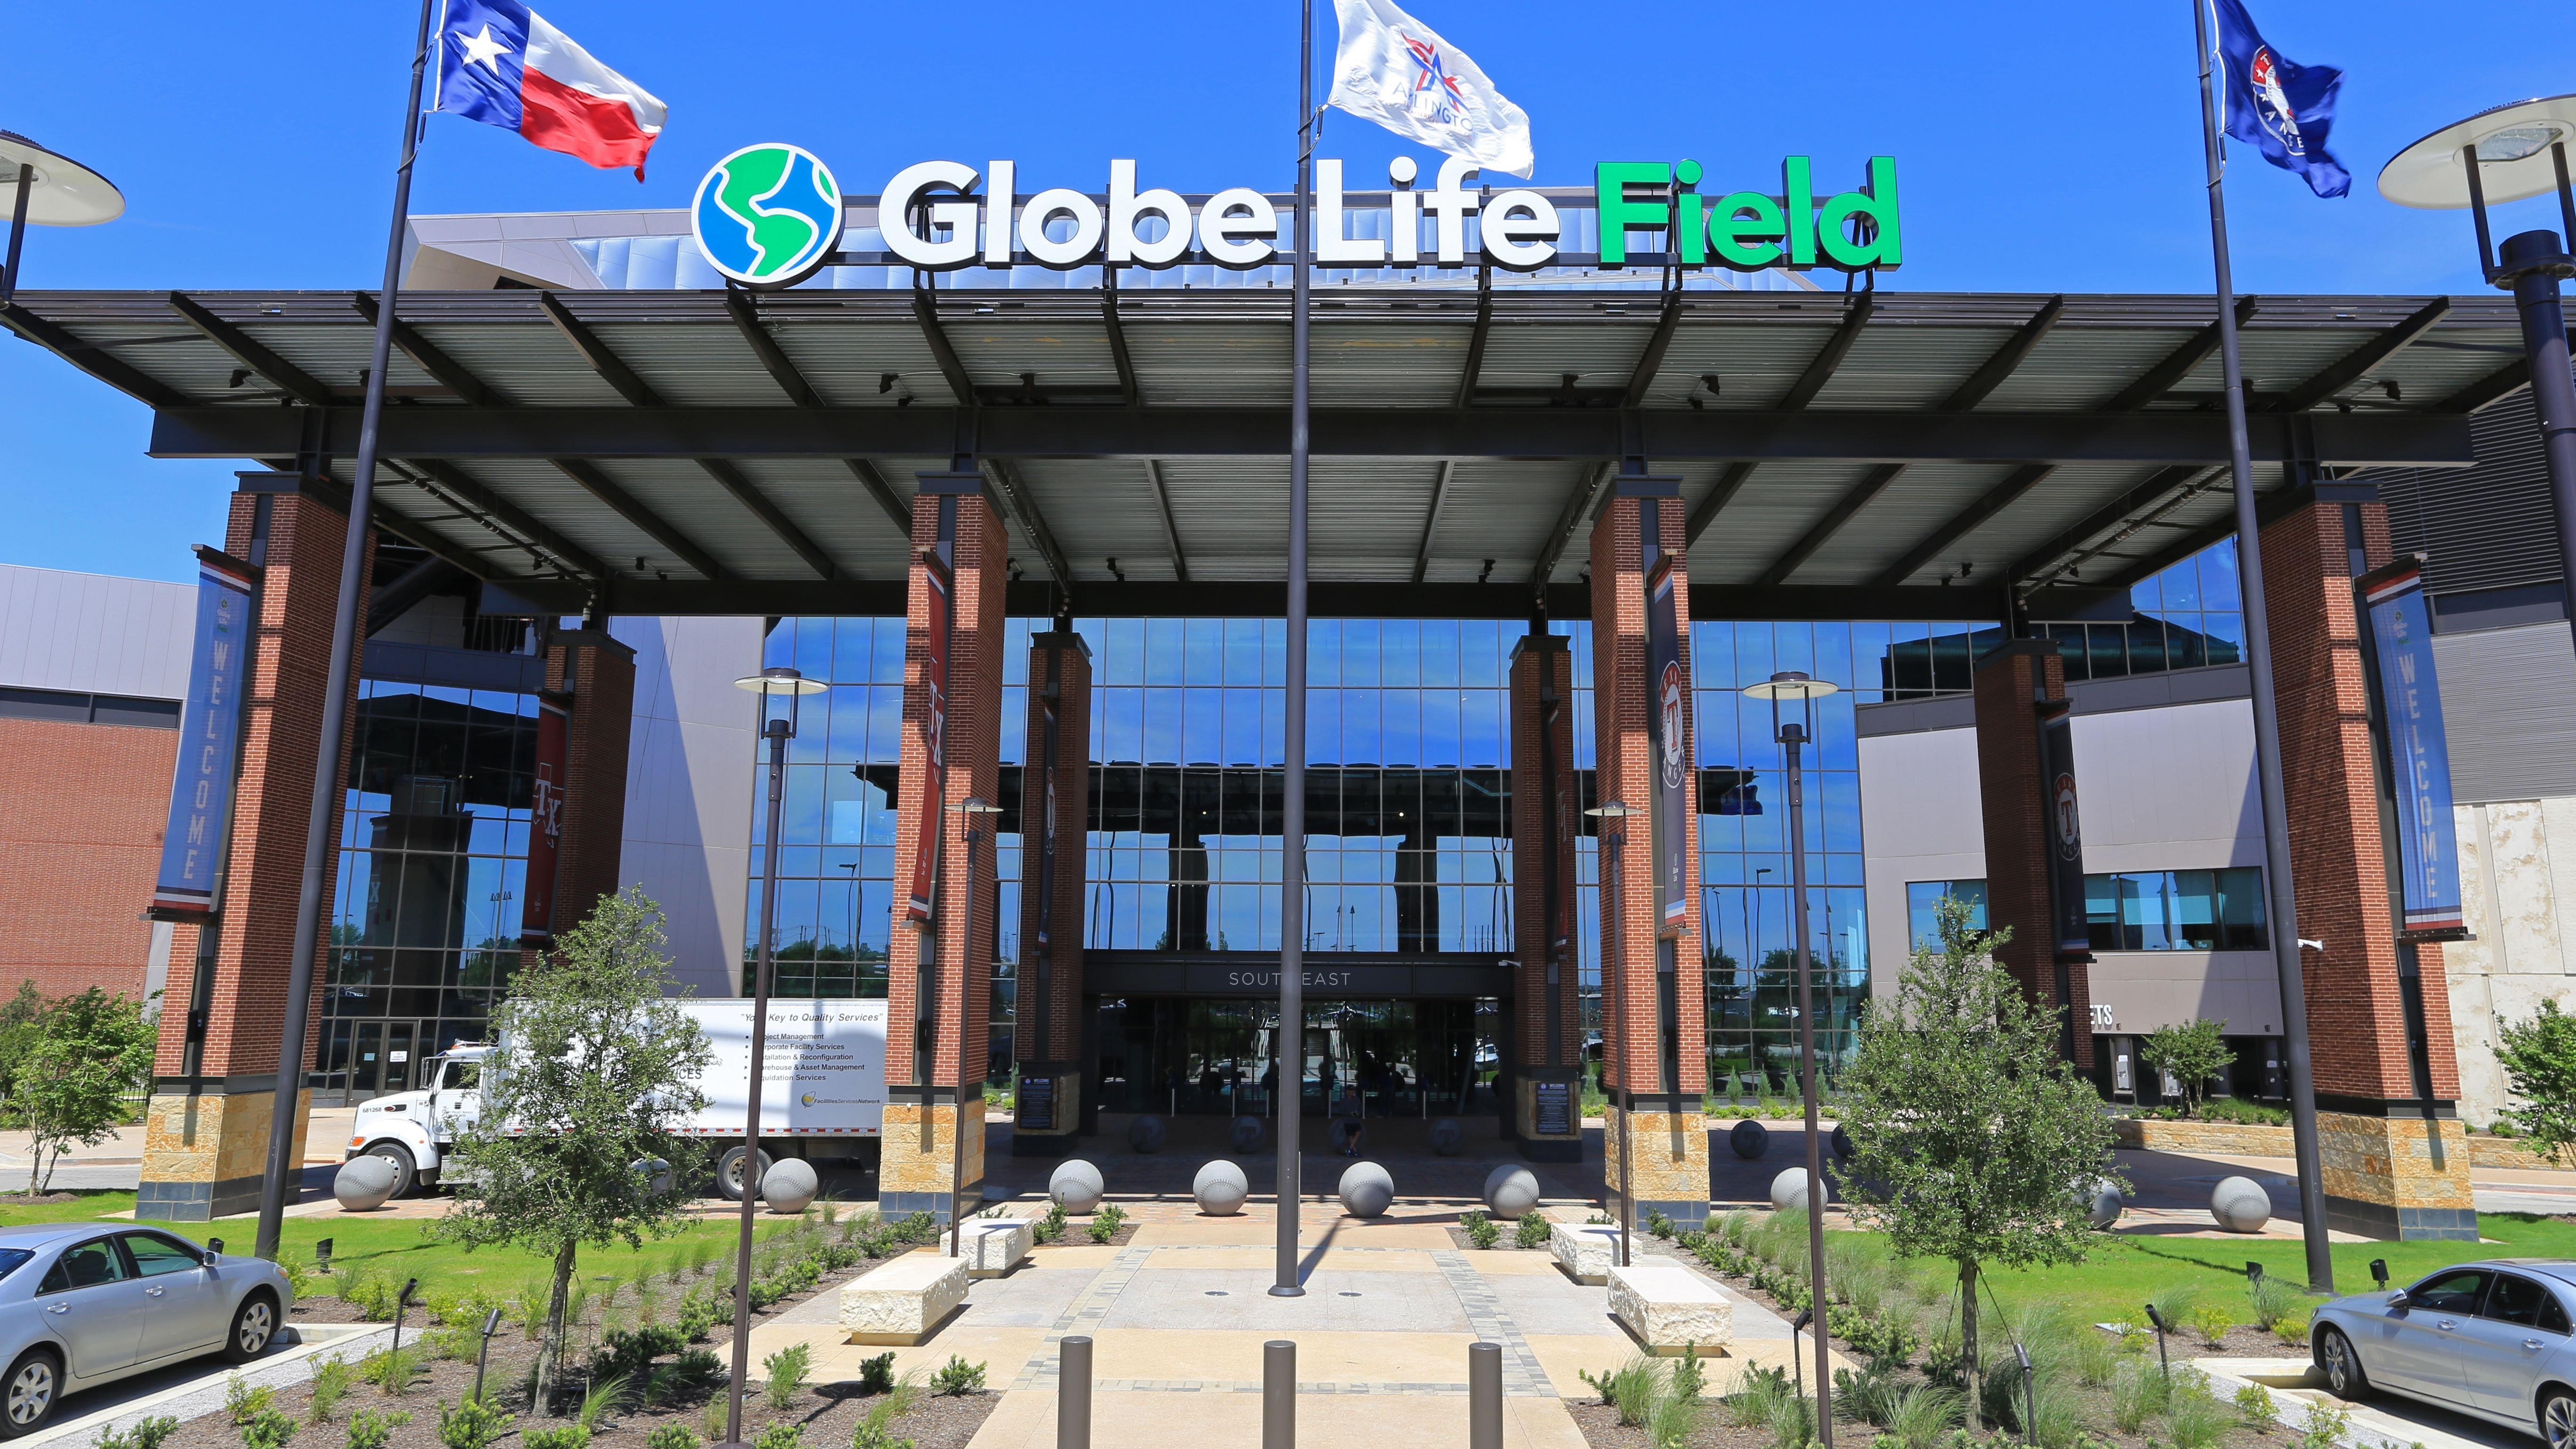 Globe Life Field, home of the Texas Rangers